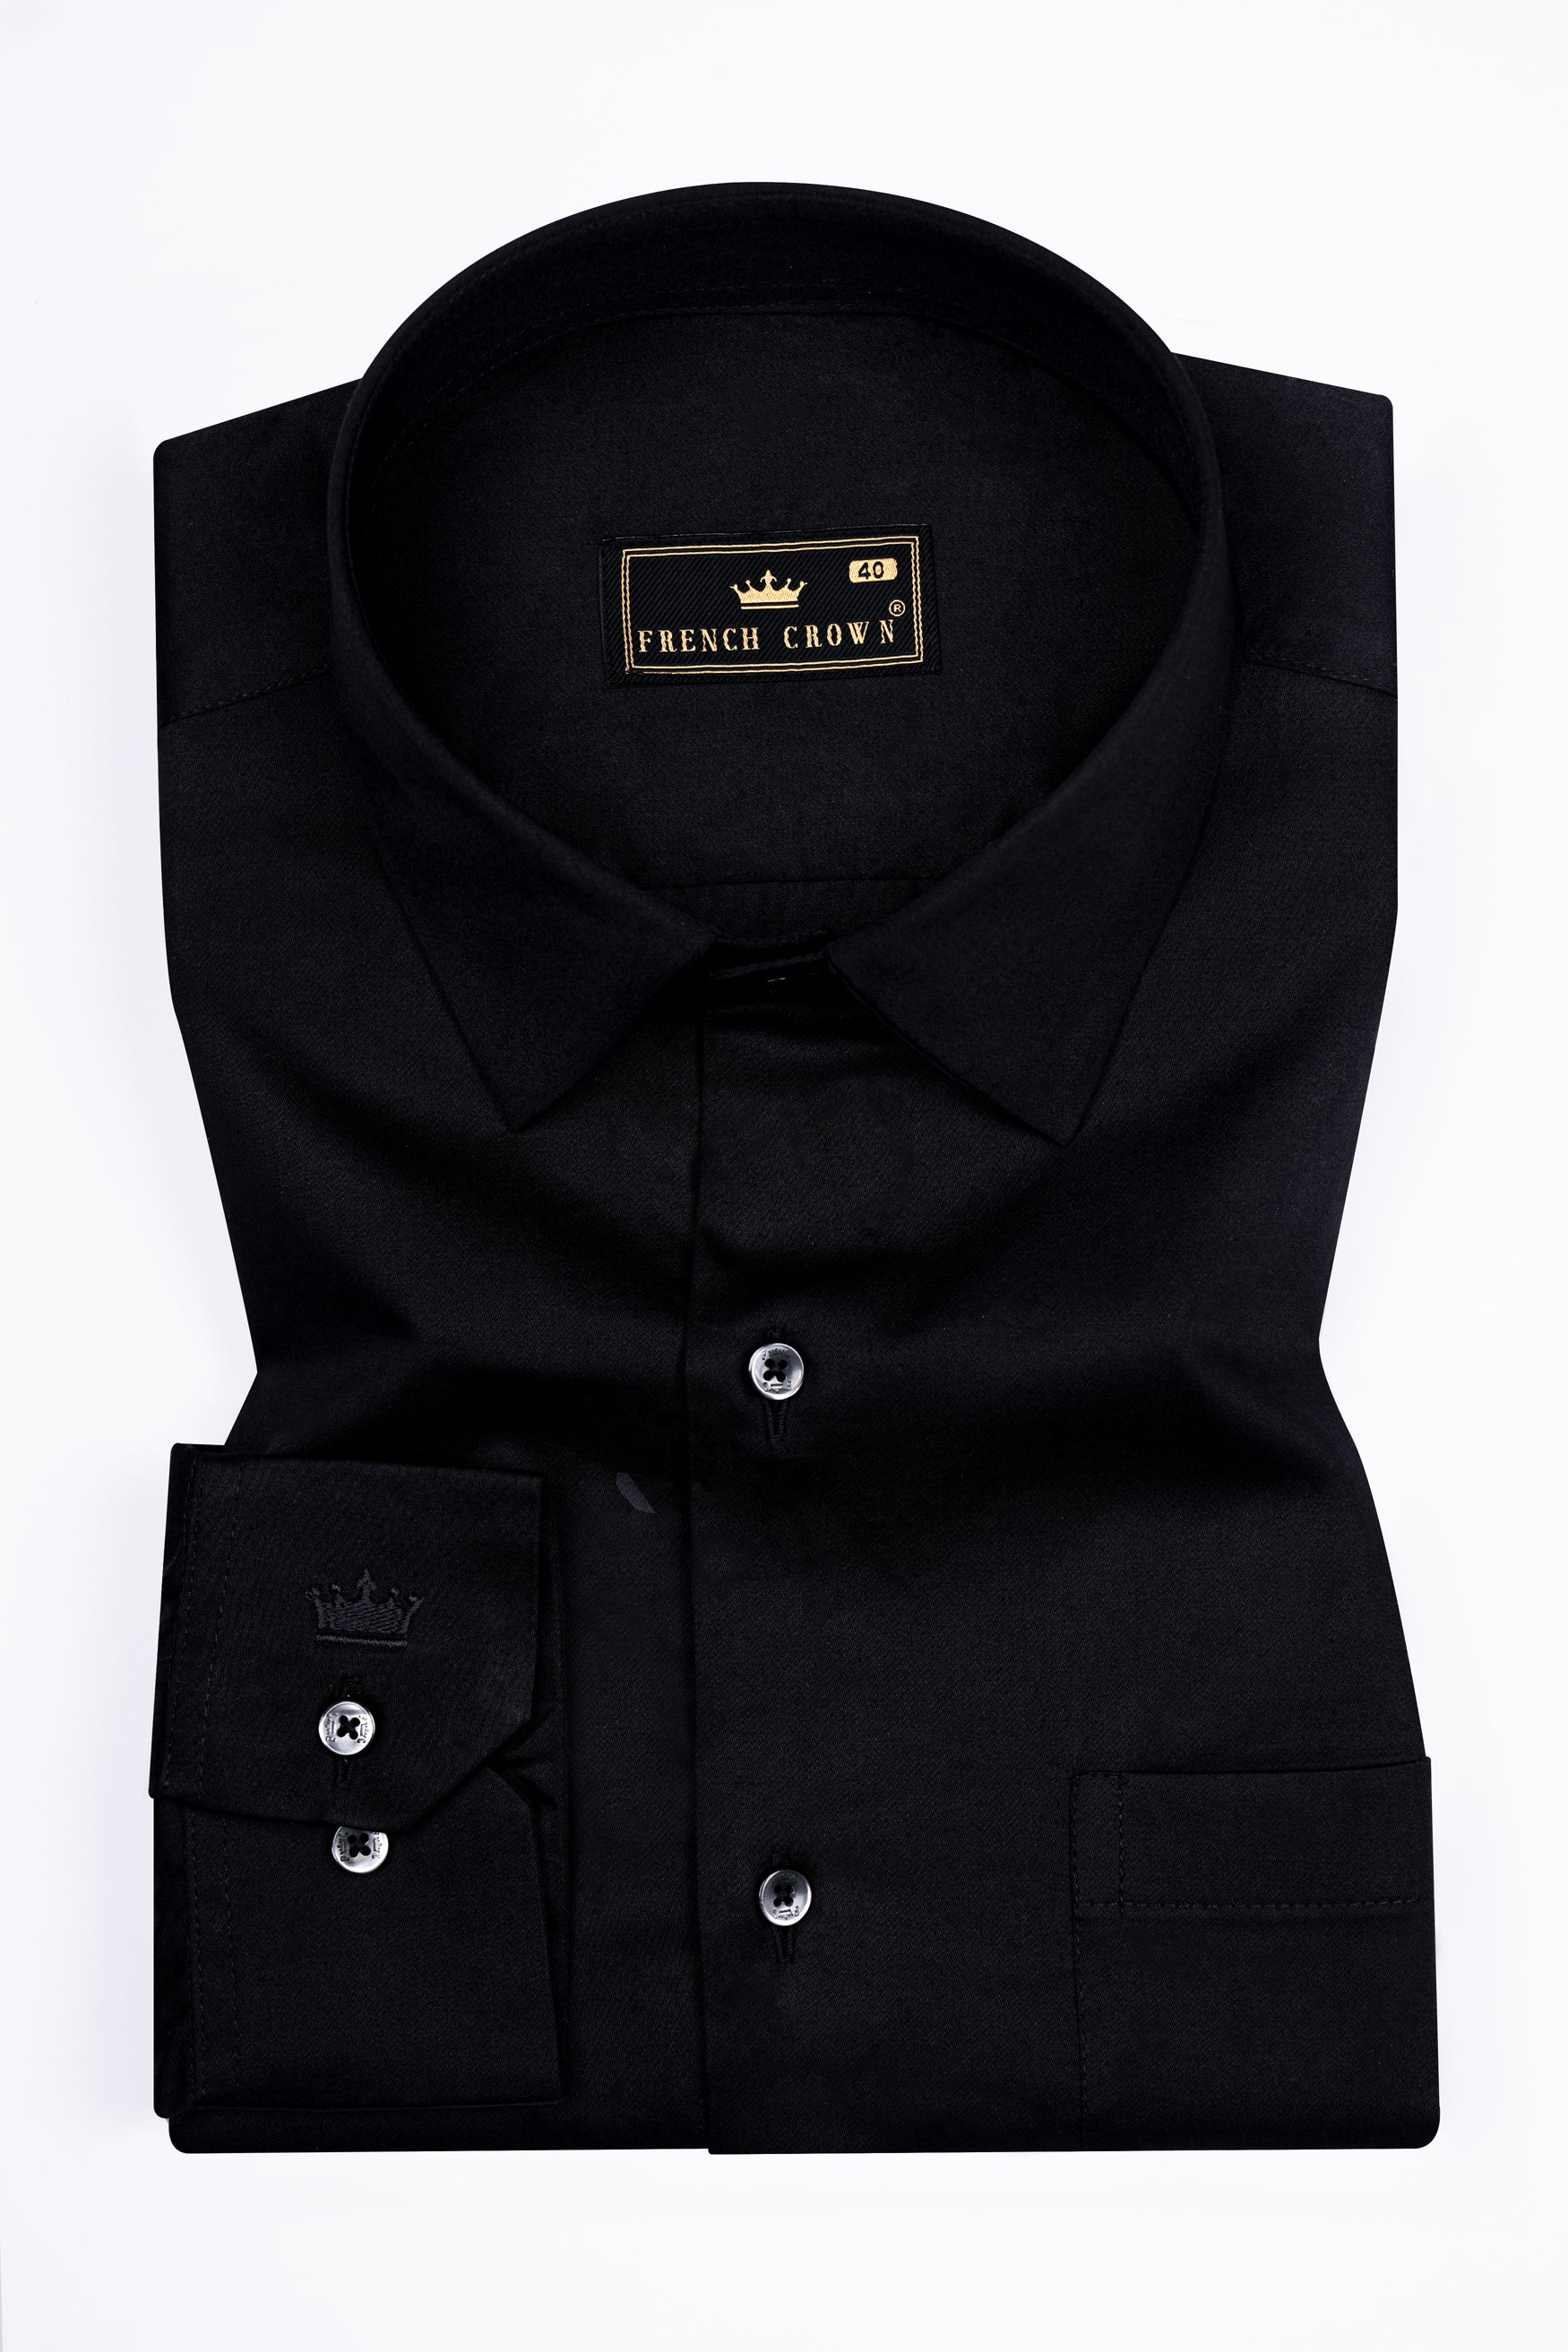 Jade Black with Santa Claus Embroidered Subtle Sheen Super Soft Premium Cotton Designer Shirt